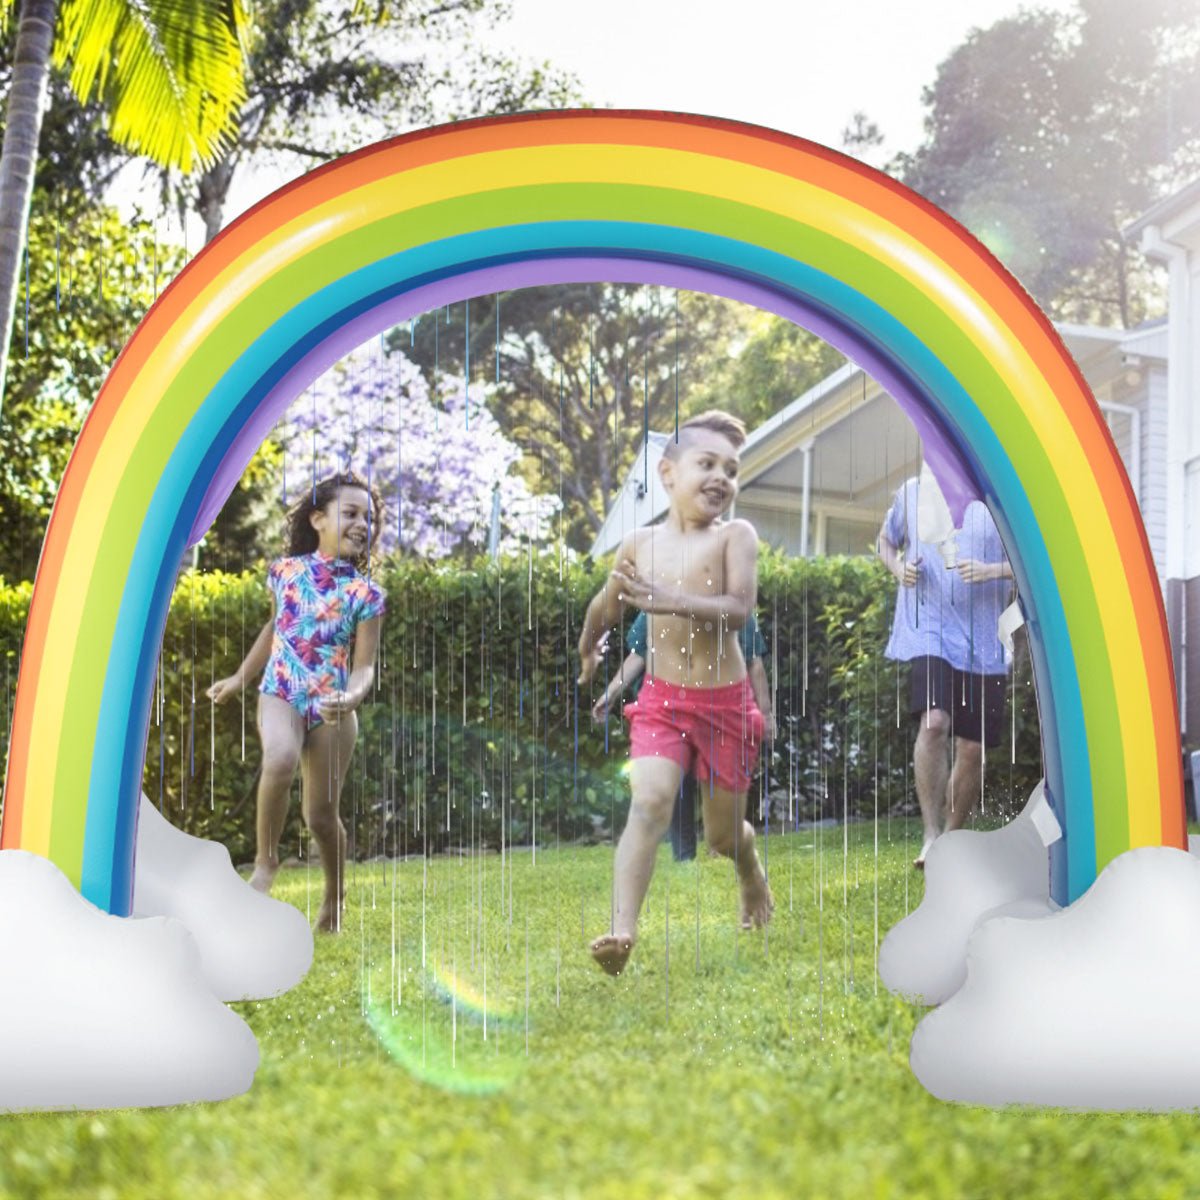 Joyful Water Play: Inflatable Rainbow Sprinkler for Backyard, Beach, and Lawn